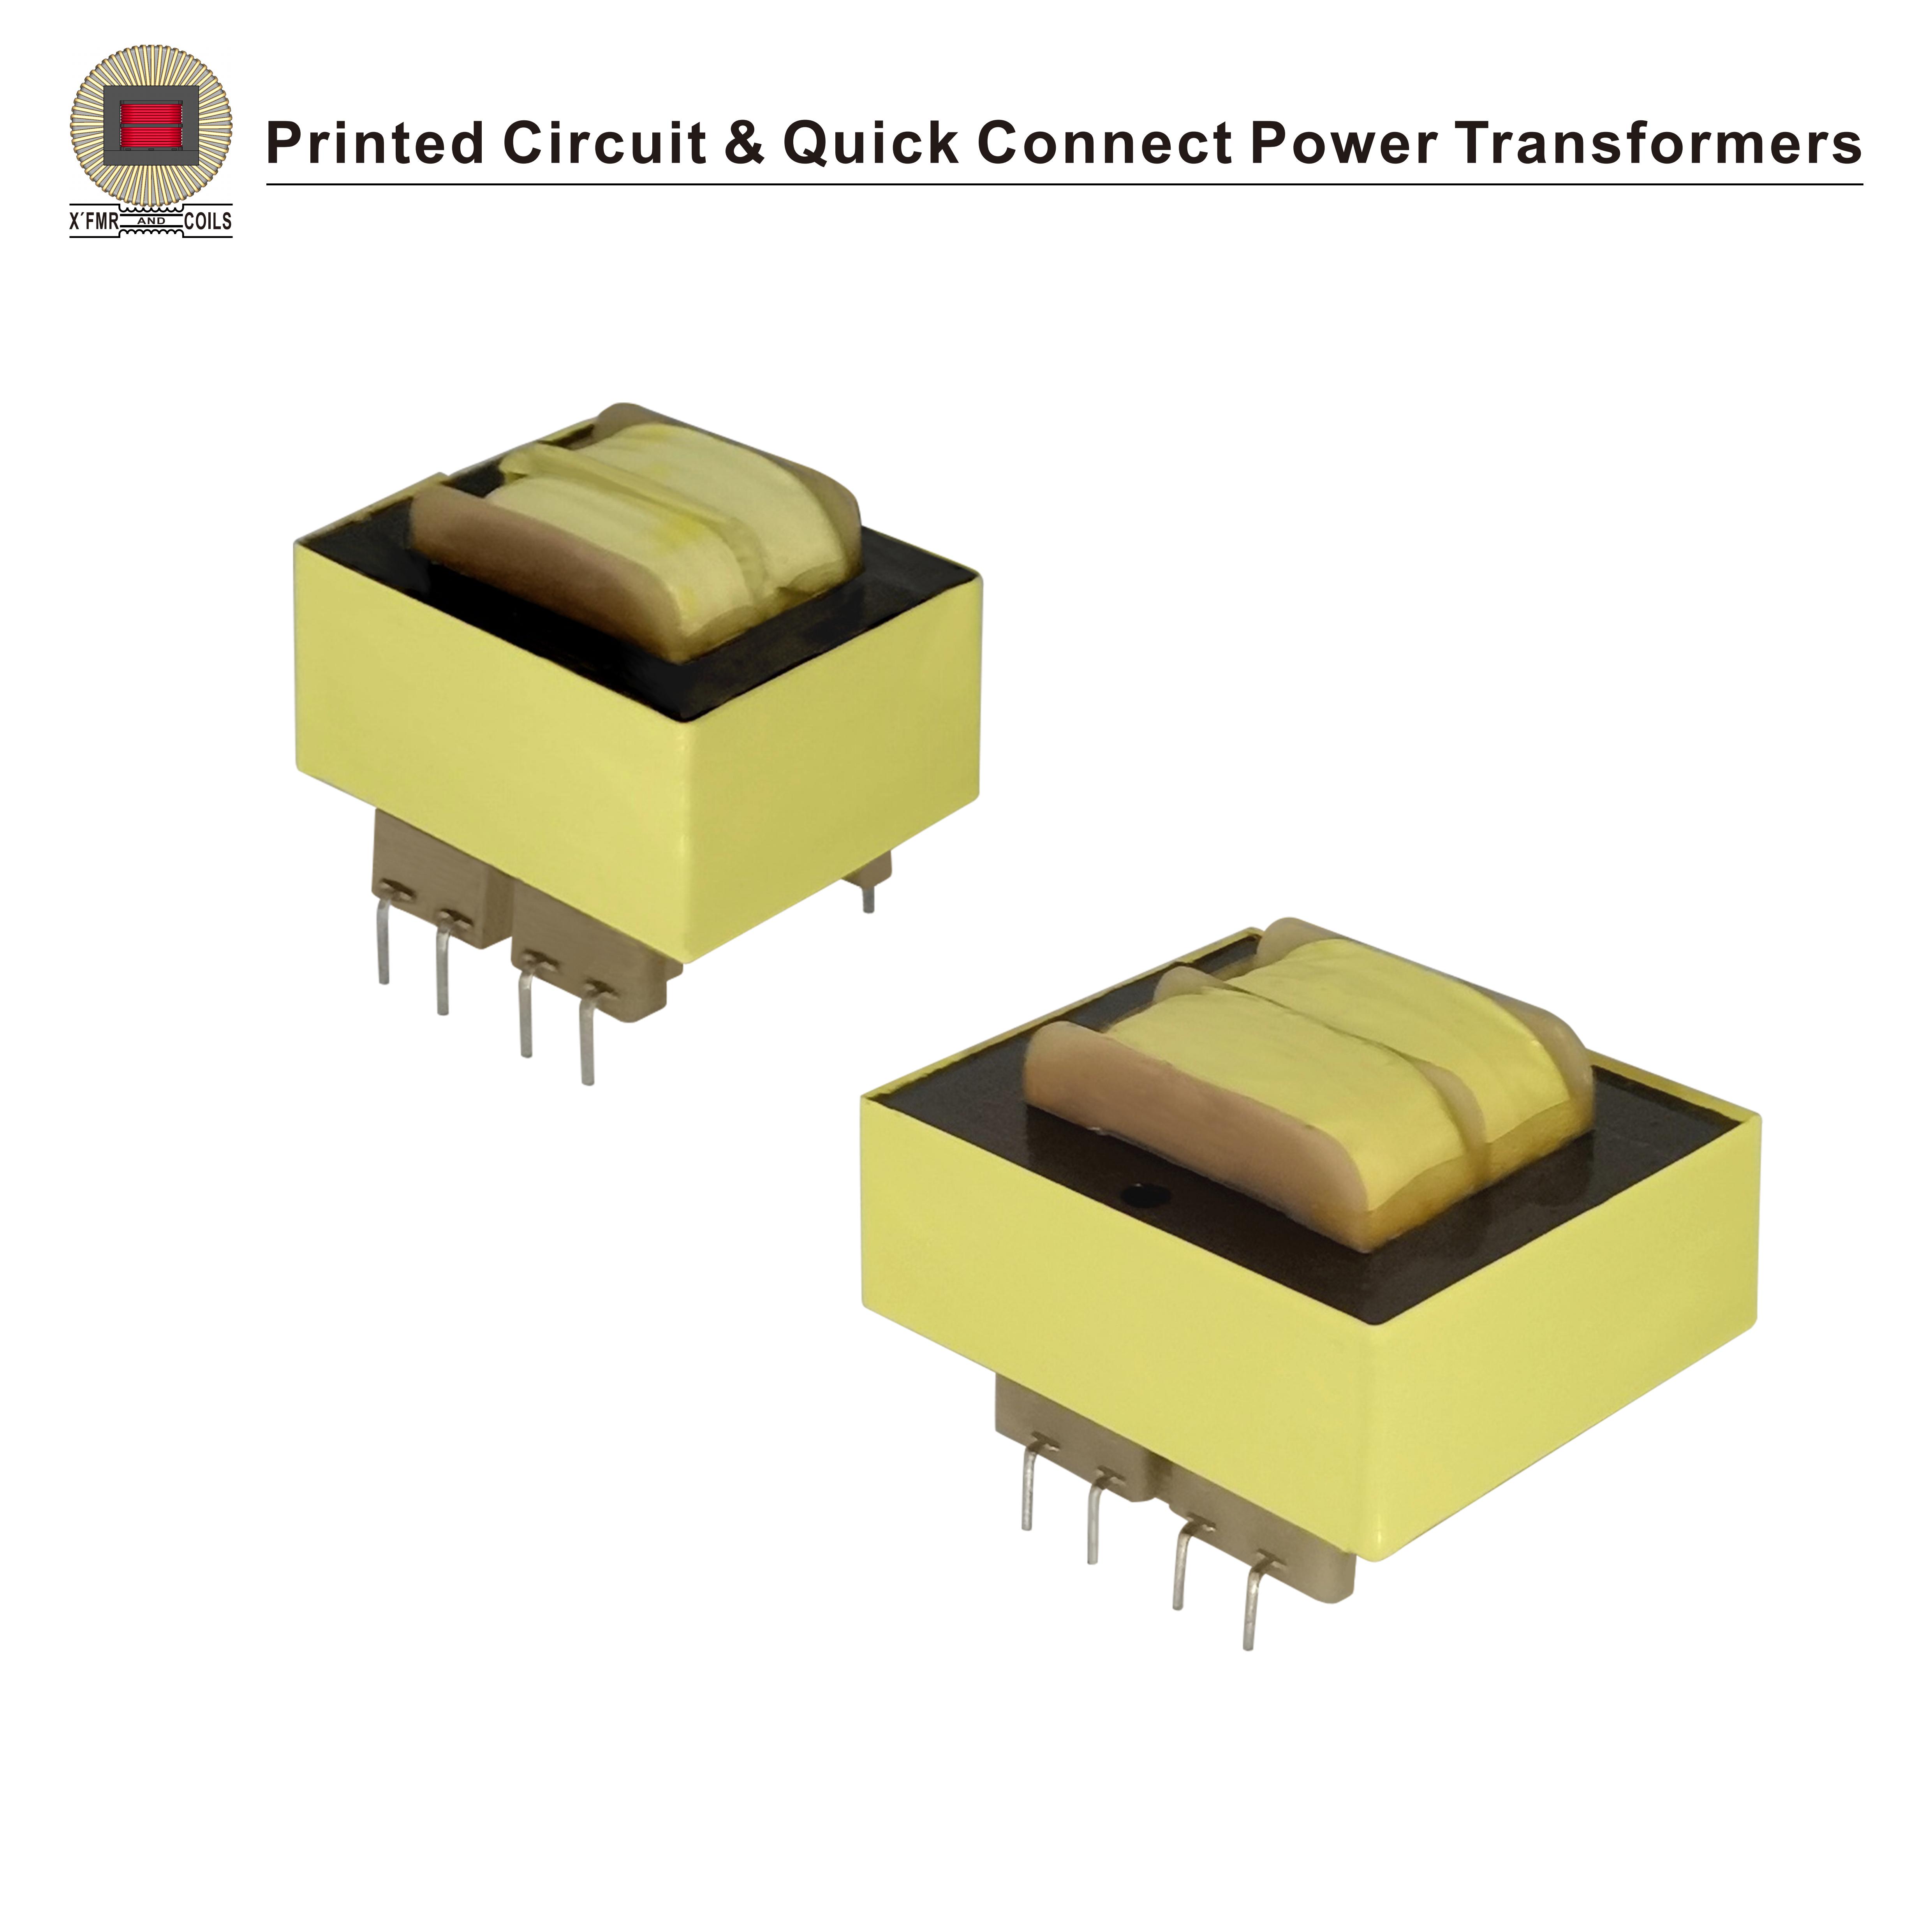 Printed Circuit Power Transformer PCPT-01 Series